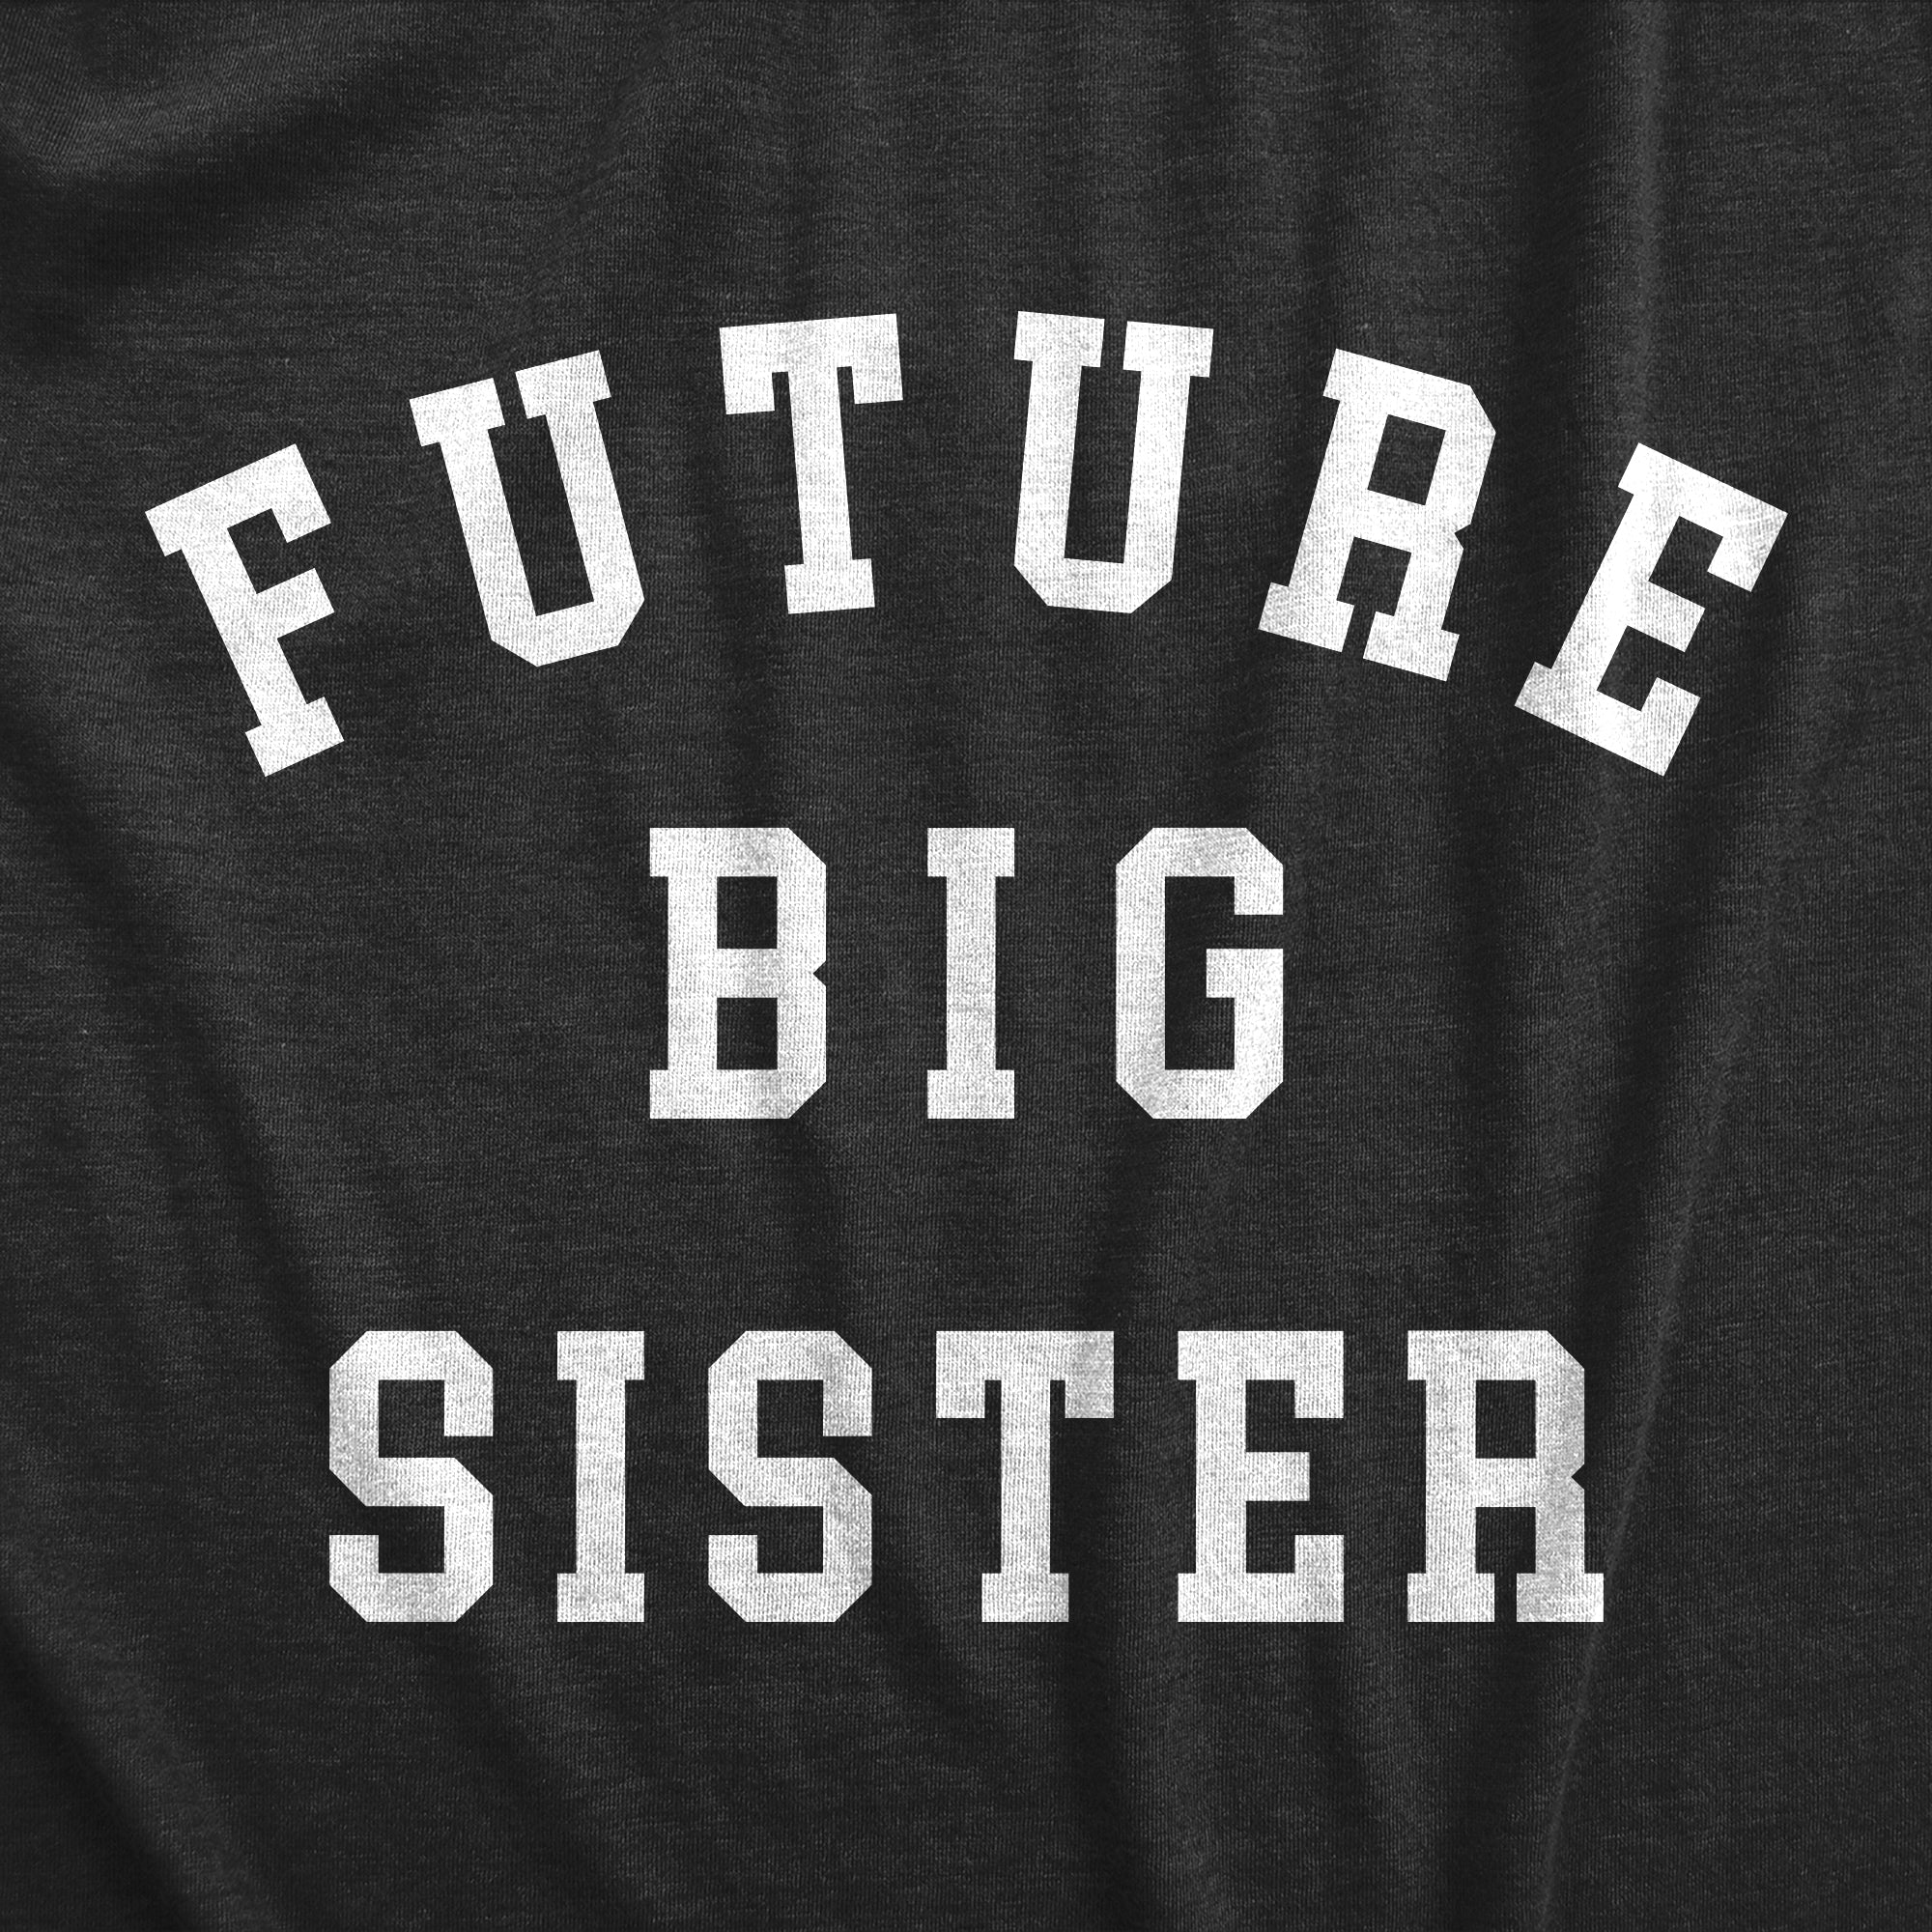 Funny Heather Black - Future Big Sister Future Big Sister Youth T Shirt Nerdy Sister Tee